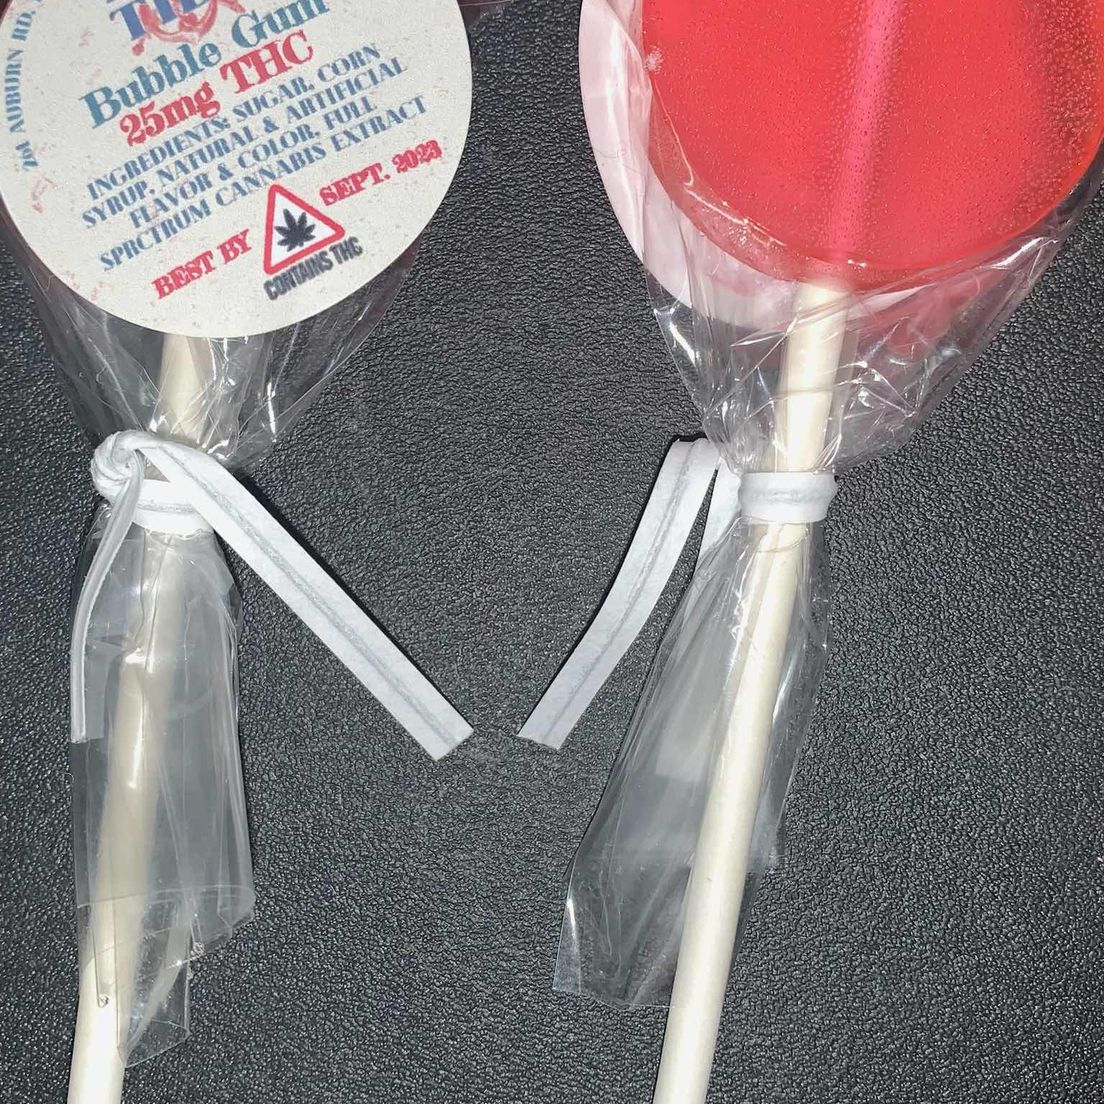 Bubblegum 25mg lollipop